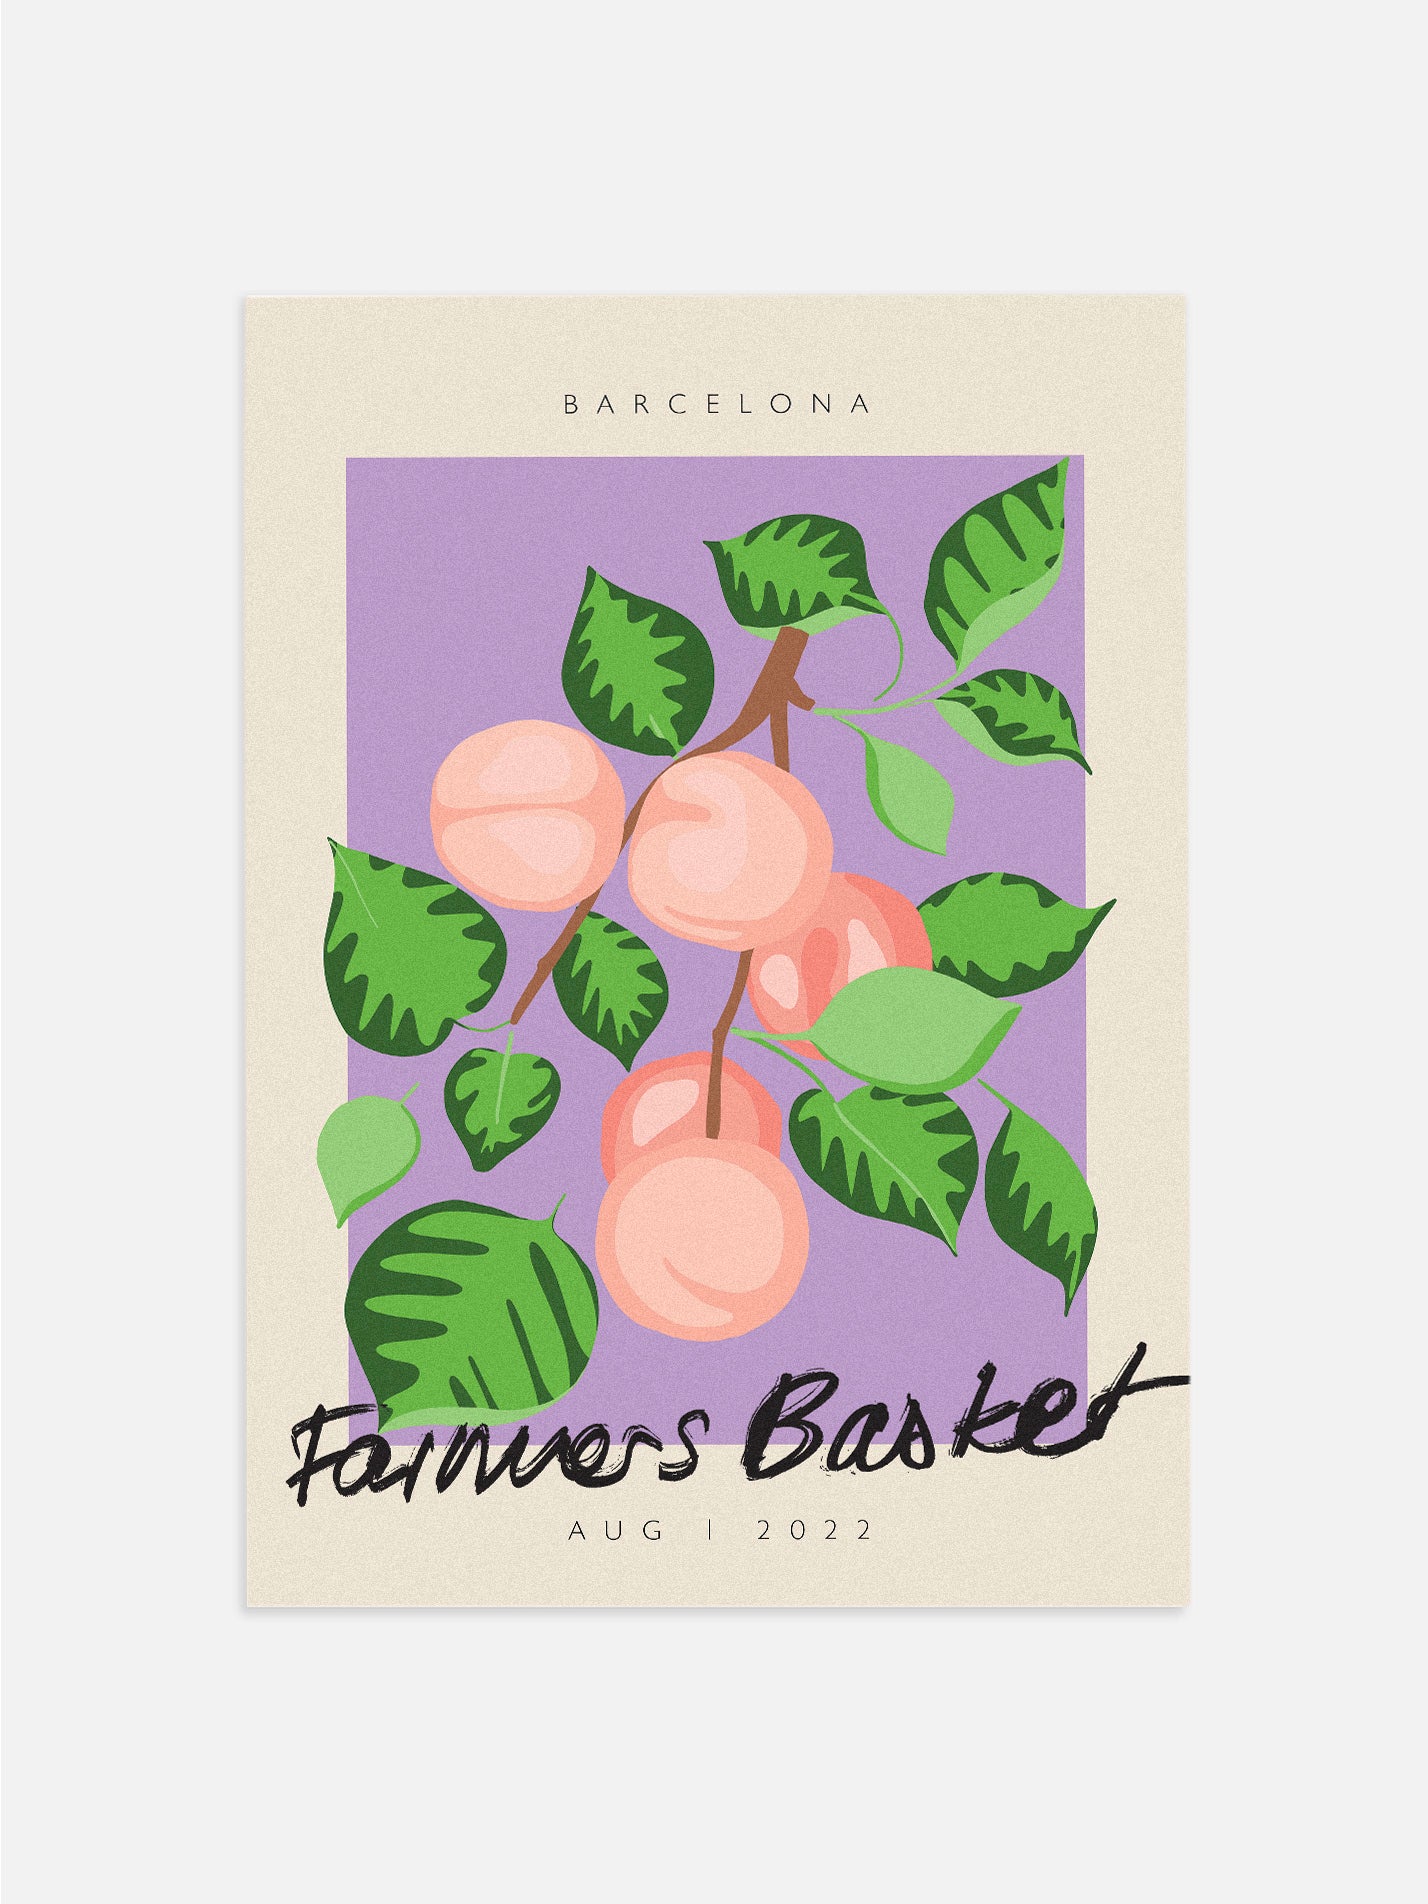 Barcelona Farmer’s Basket